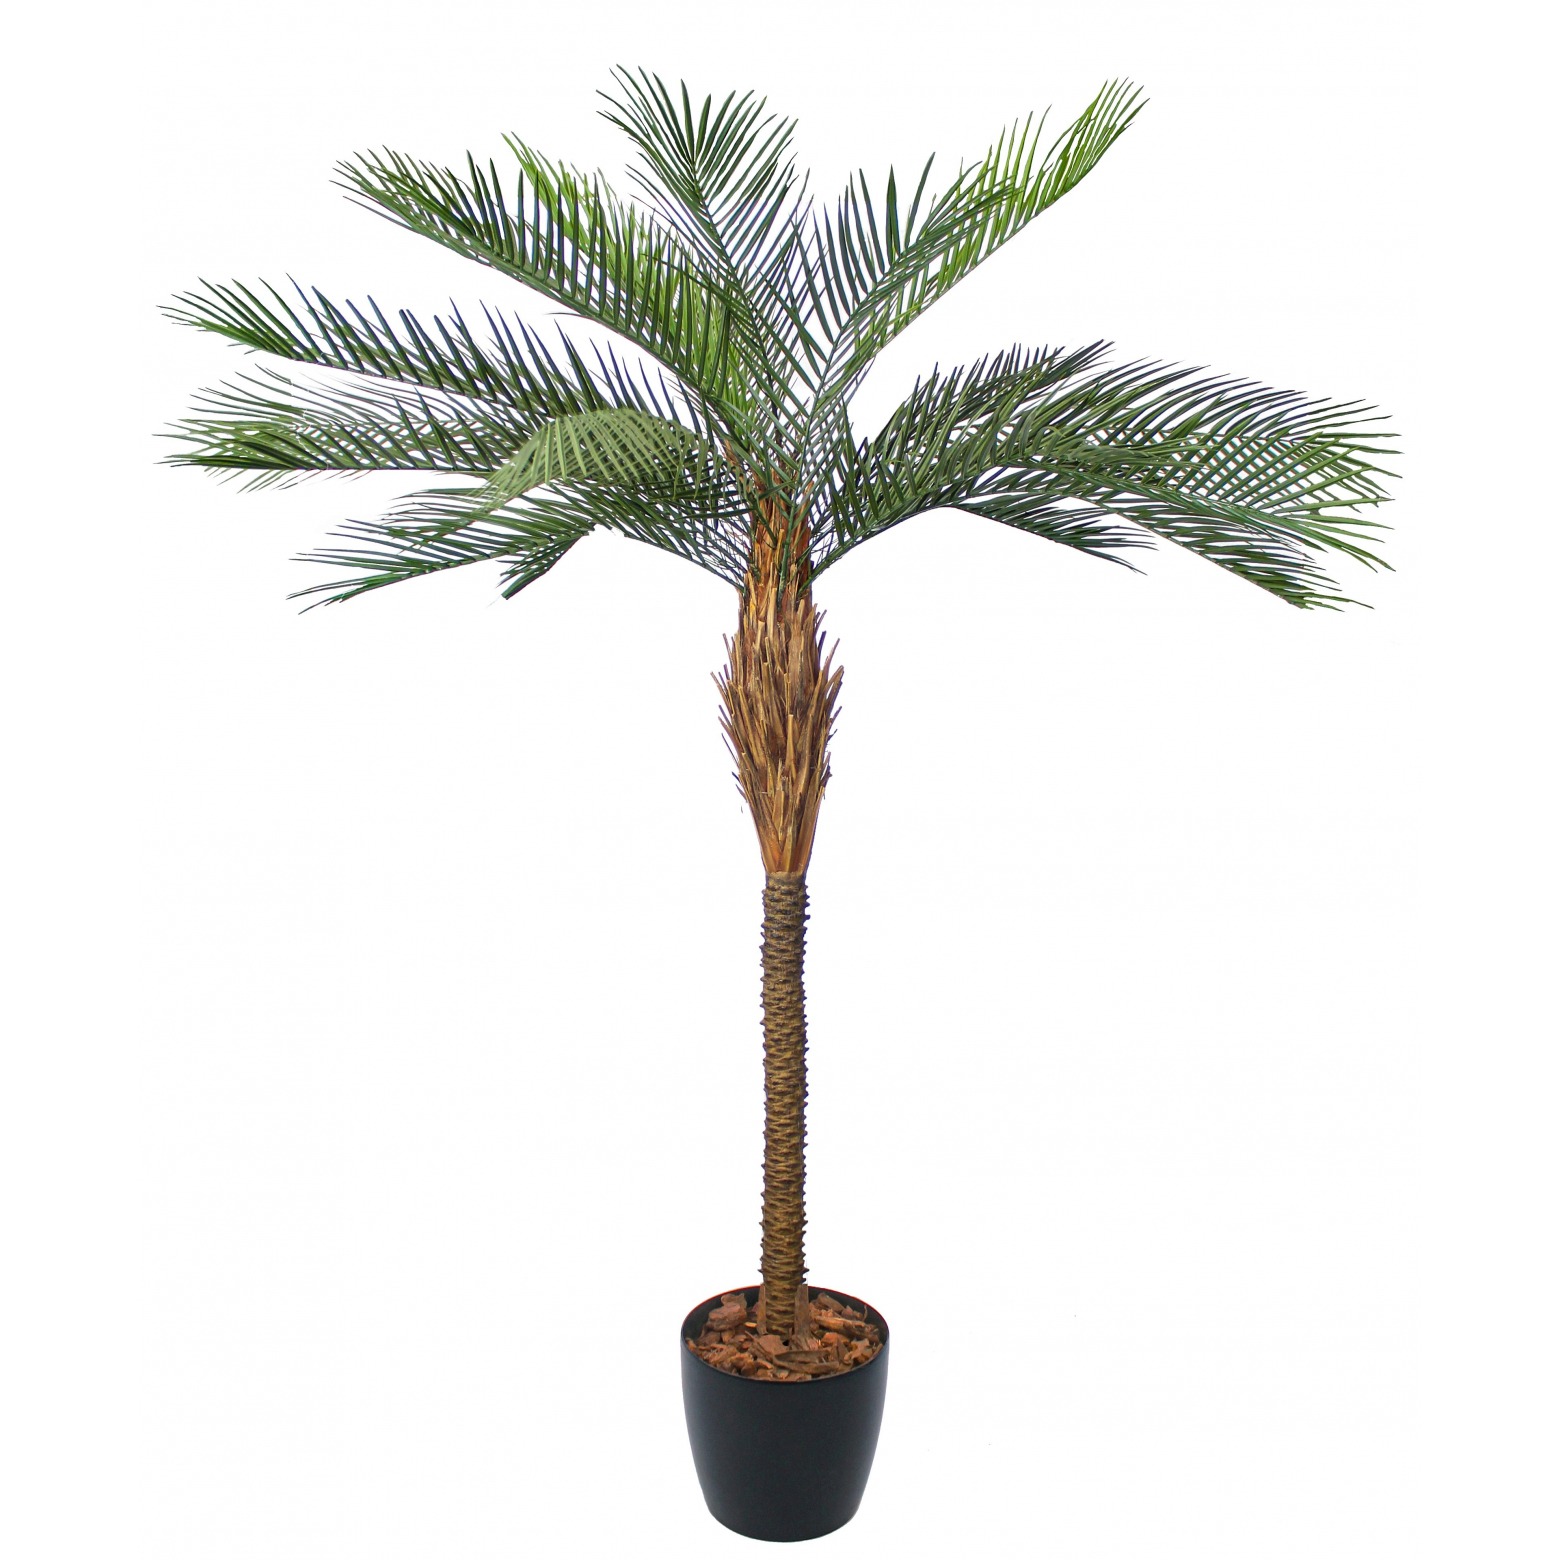 Choisir son palmier d'extérieur - Gamm vert